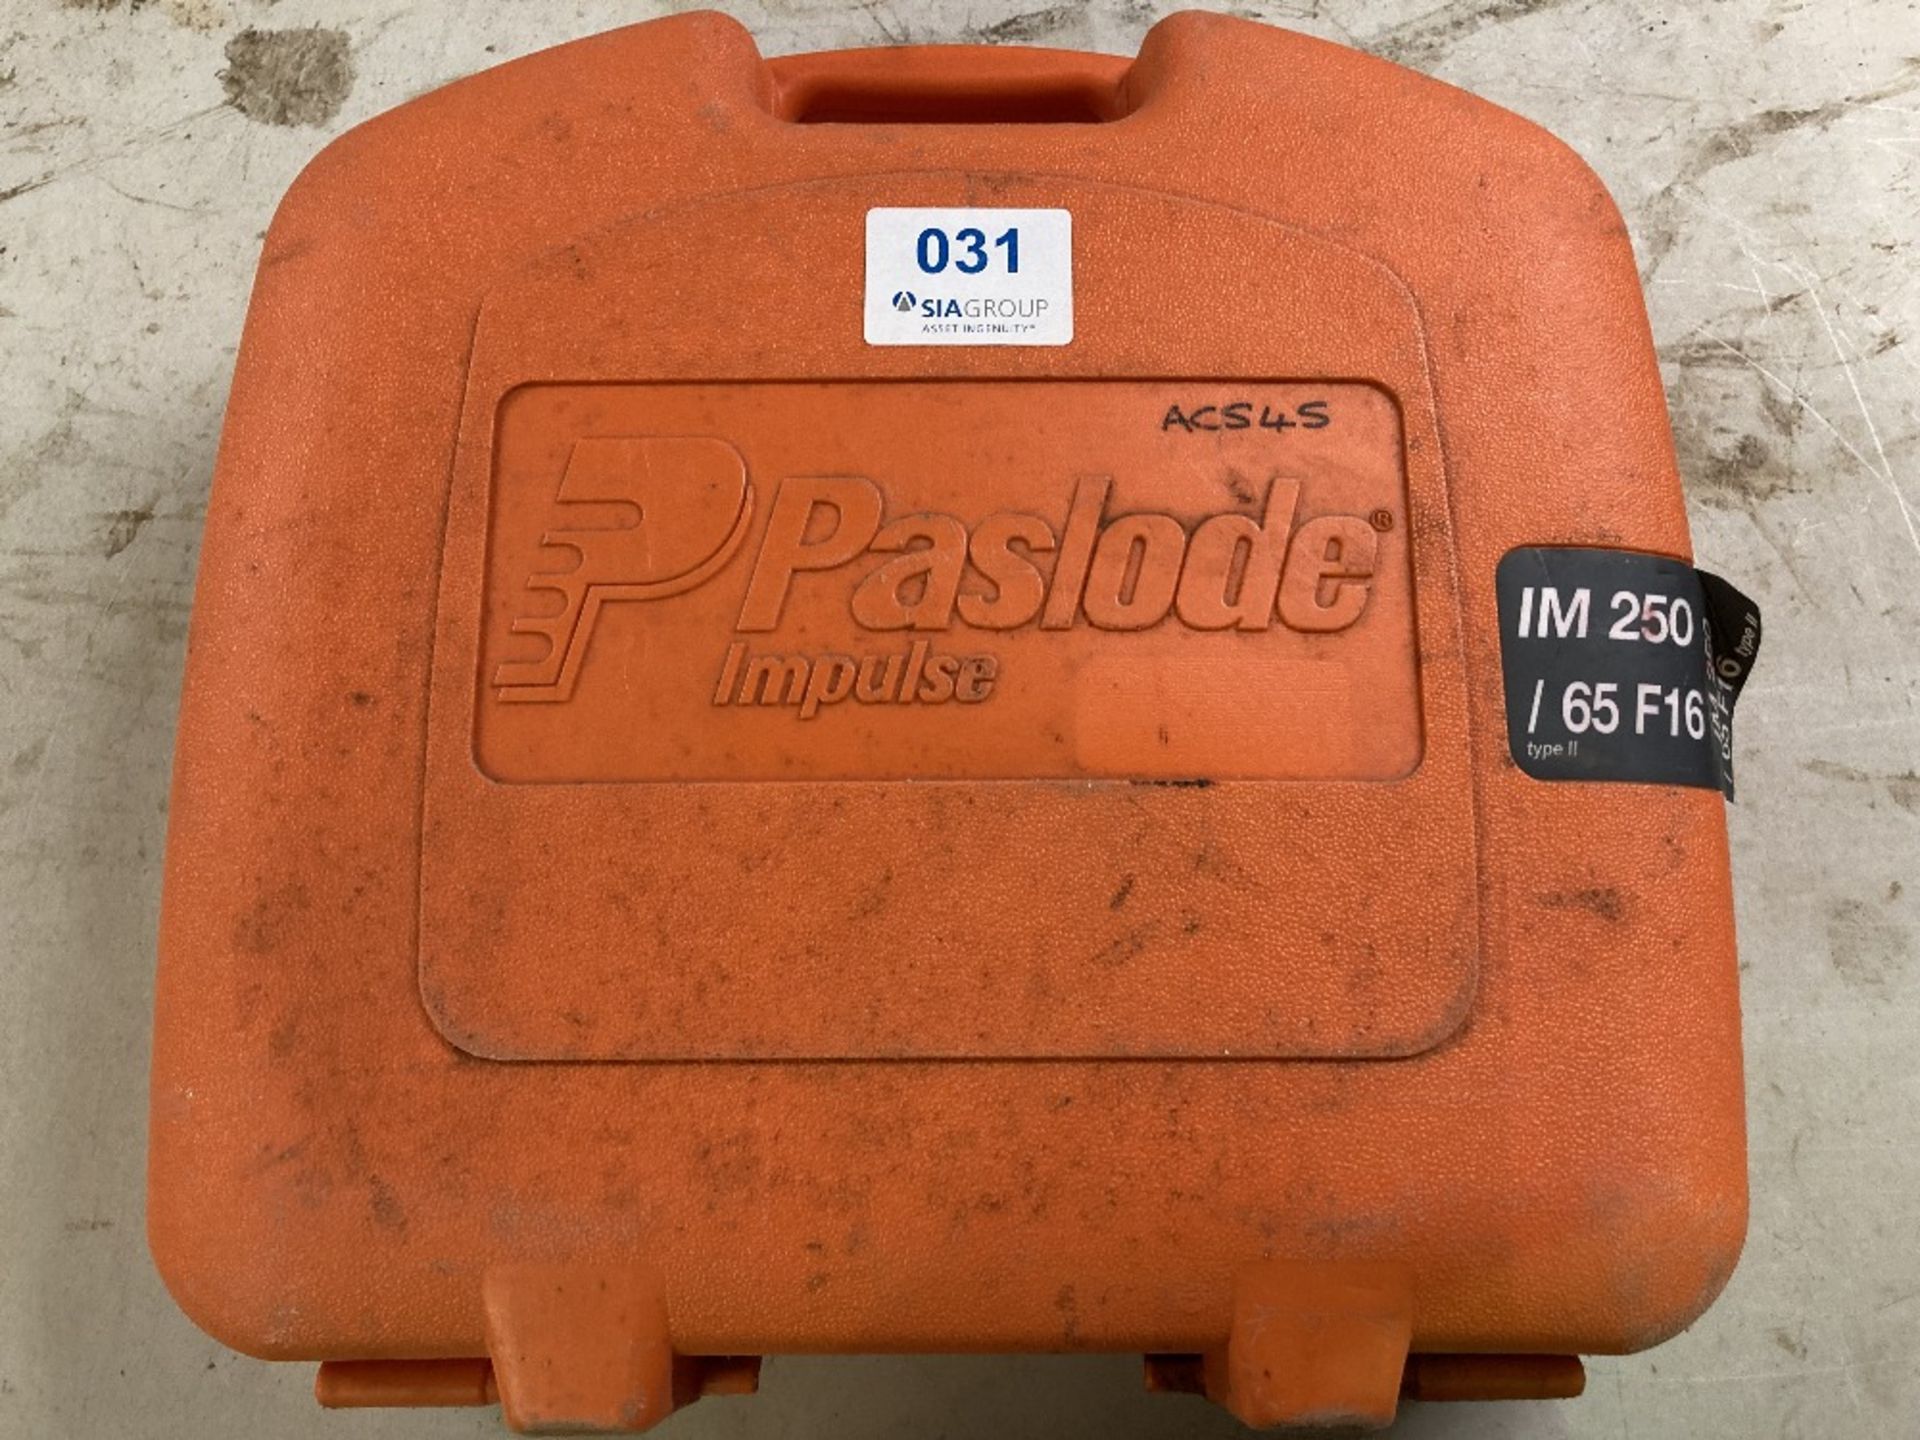 Paslode Impulse IM 250 II Straight Finish Nailer - Image 3 of 3